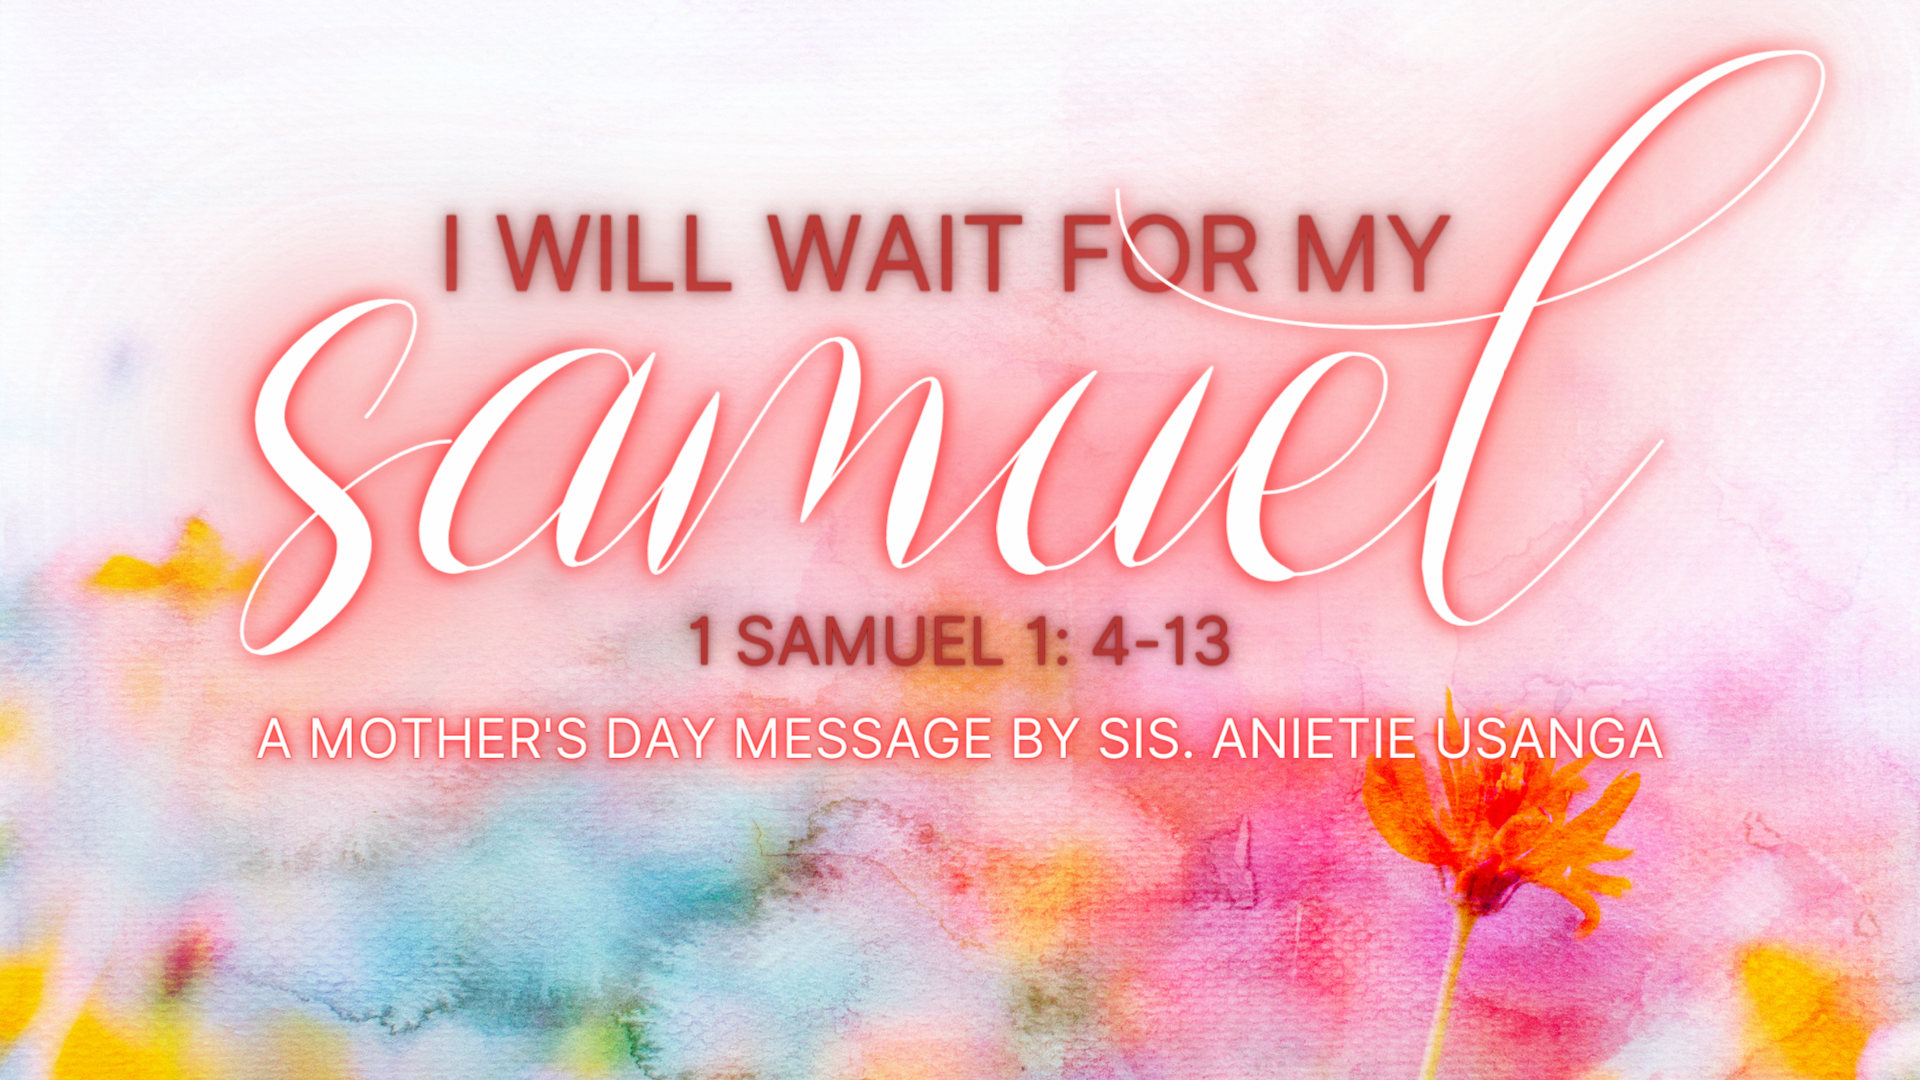 I Will Wait for My Samuel